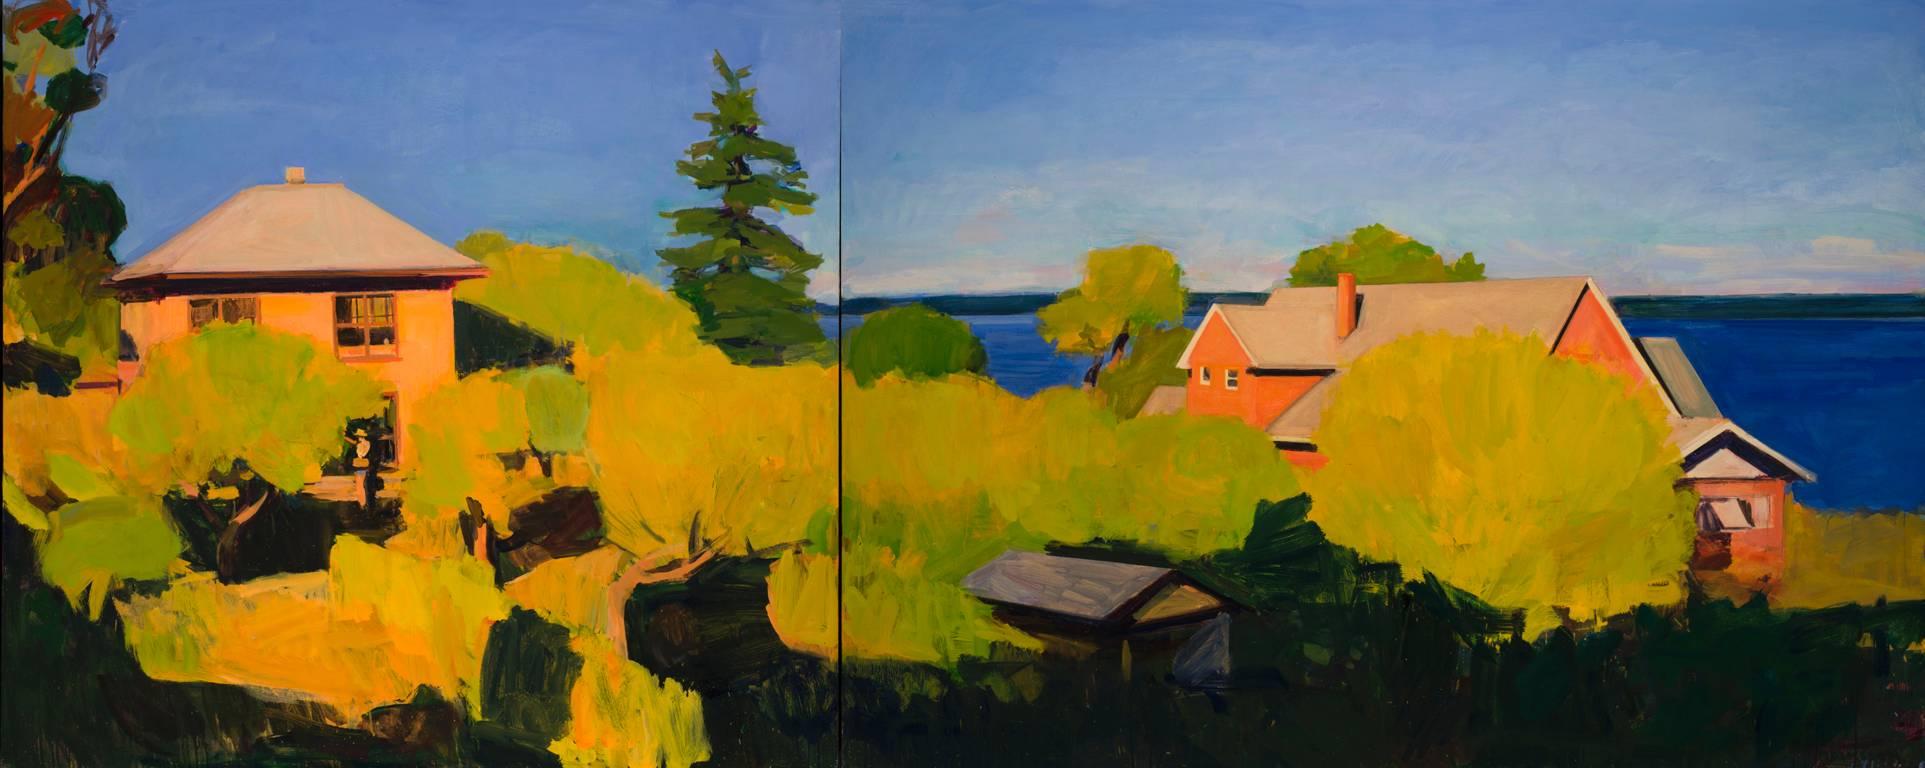 Landscape Painting Kurt Solmssen - Summer on 7th St. (Diptyque) 